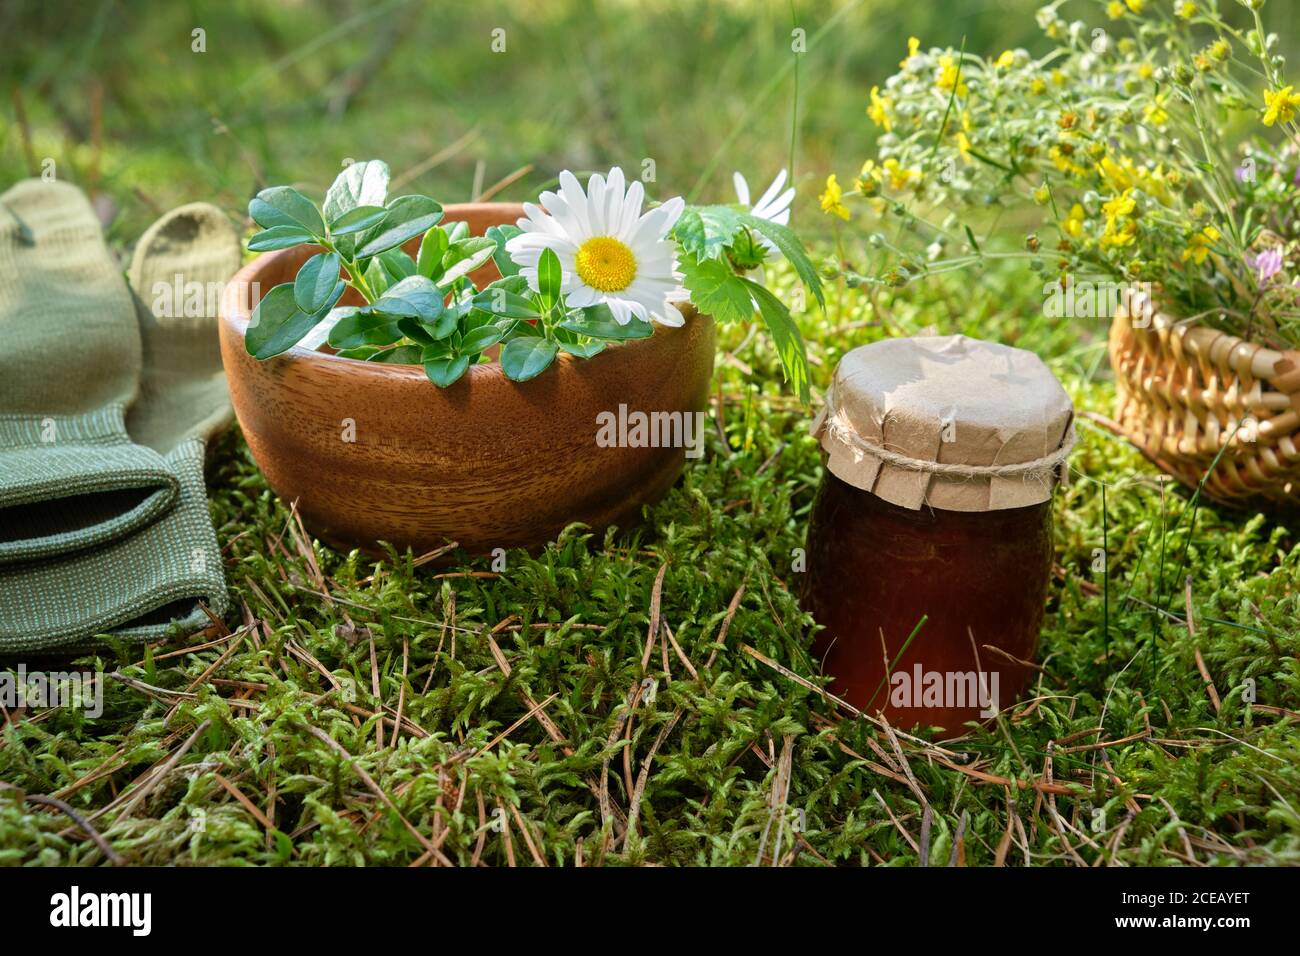 Mortar of medicinal herbs, jar of salve or balm, basket of healing plants ona green forest moss outdoors. Stock Photo